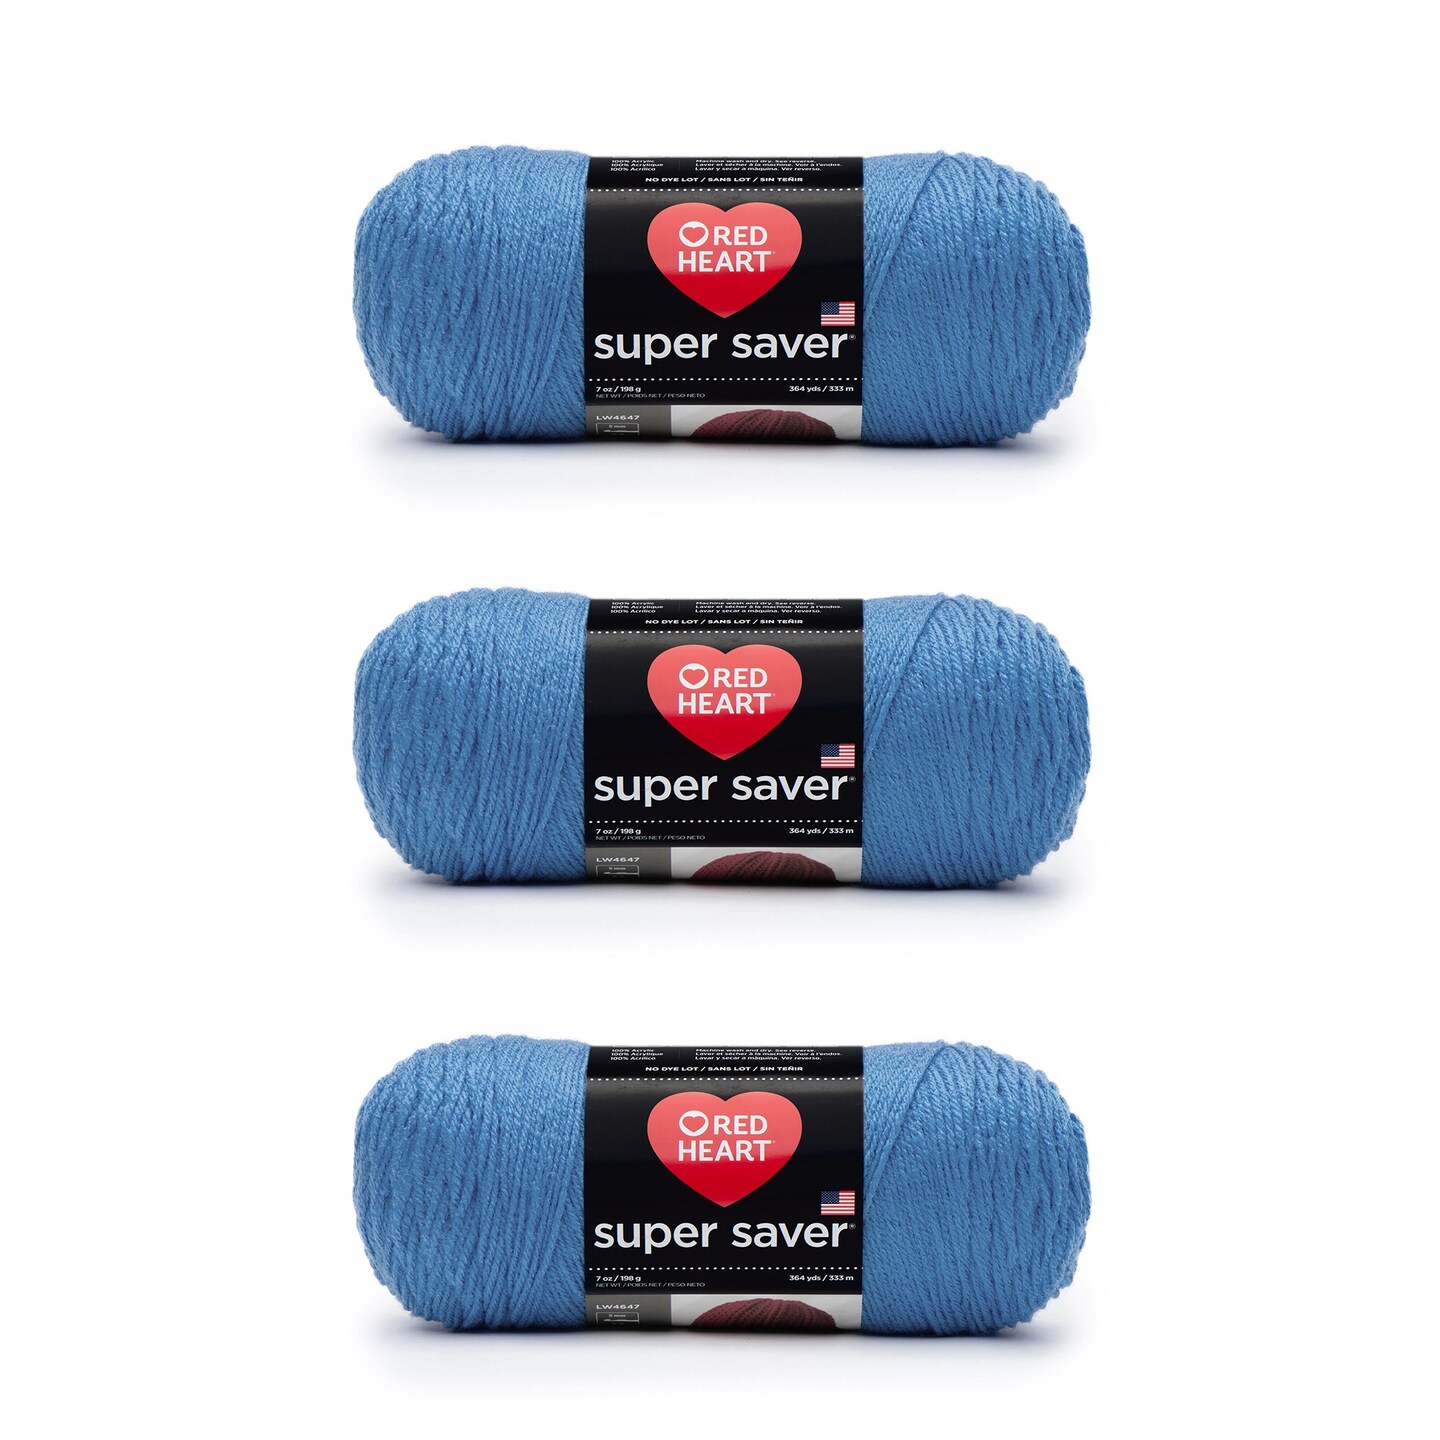 Red Heart Super Saver Delft Blue Yarn - 3 Pack of 198g/7oz